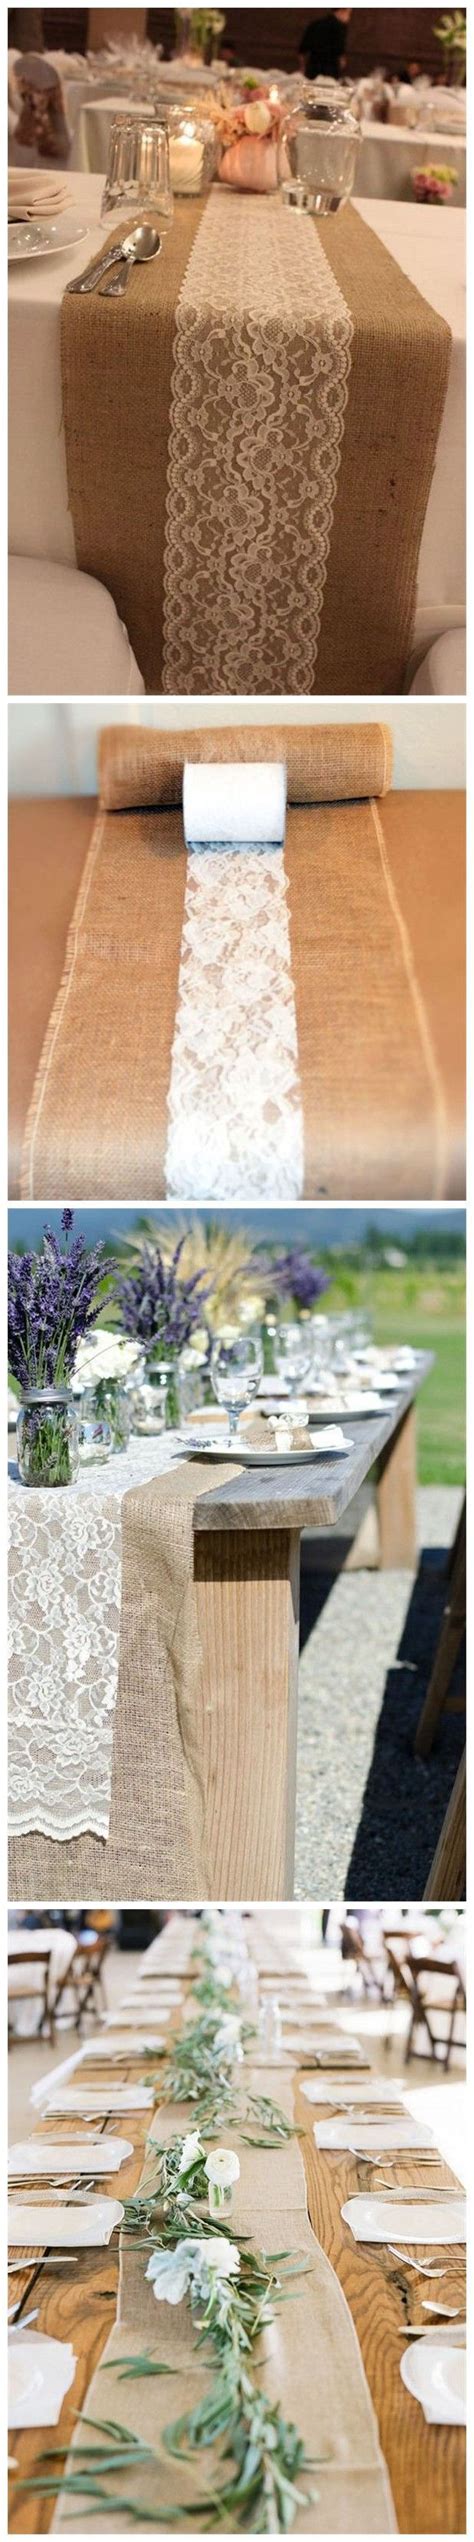 Diy Wedding Ideas 22 Rustic Burlap Wedding Table Runner Ideas You